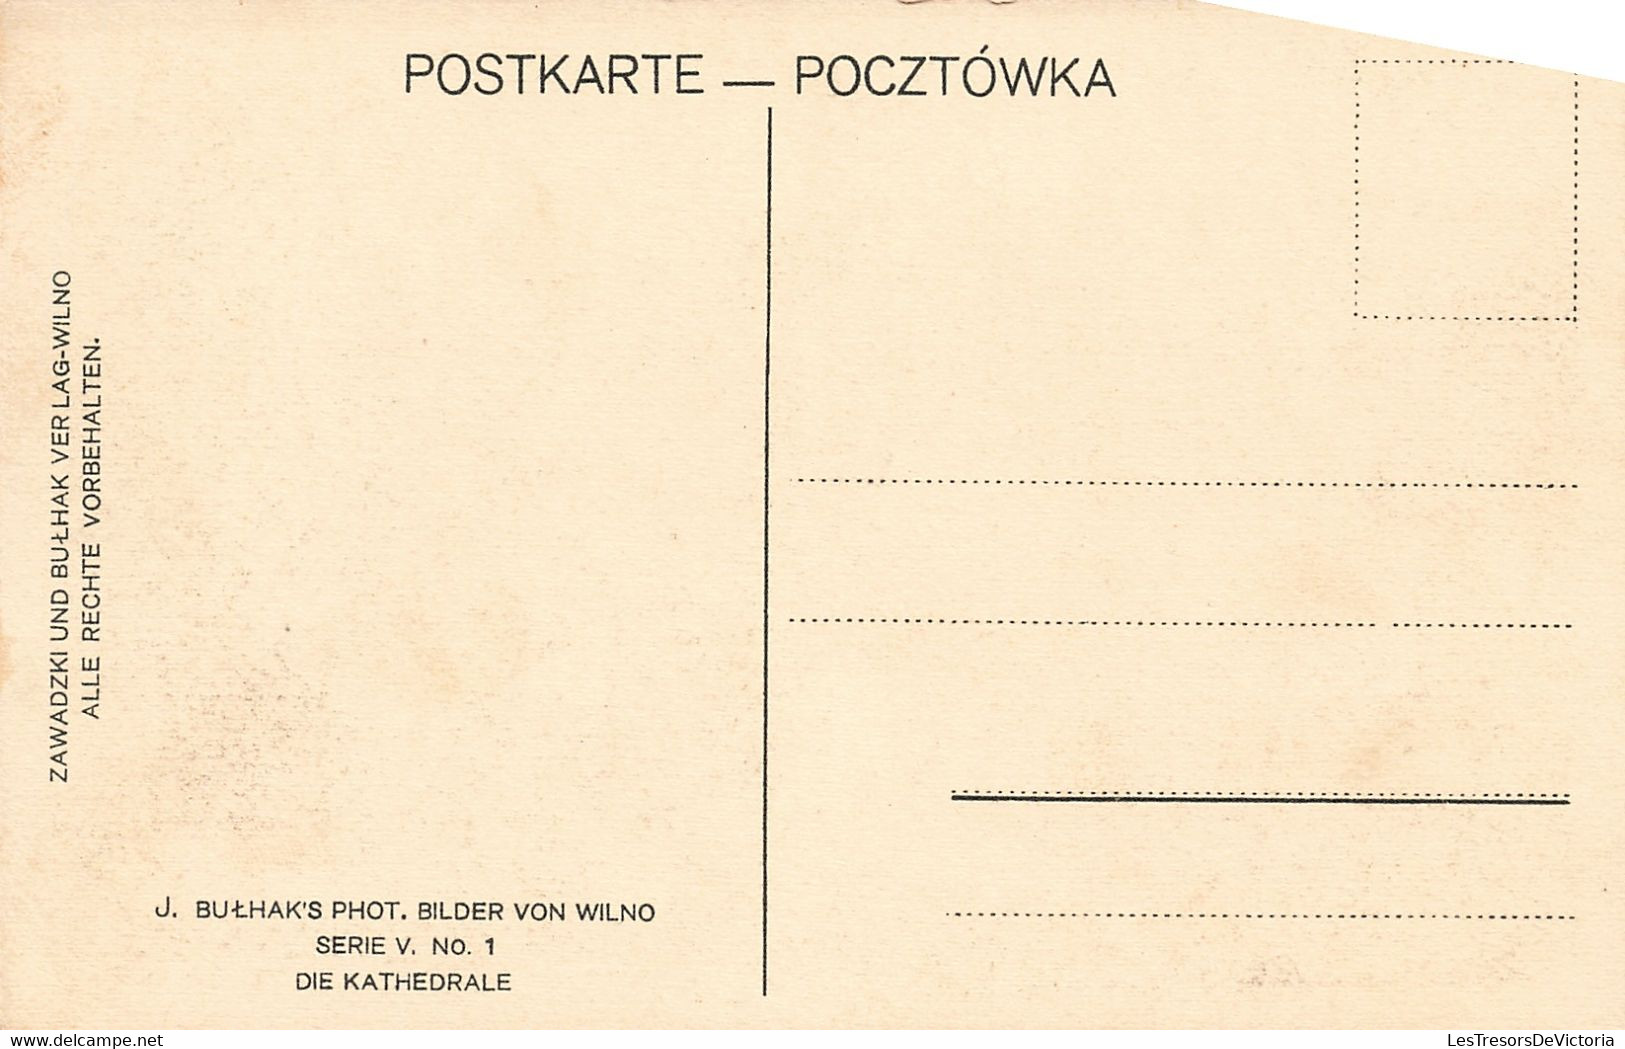 Lituanie - Wilno -  Katedra - Clocher - Edit. J. Bulhak - Panorama - Carte Postale Ancienne - Litouwen